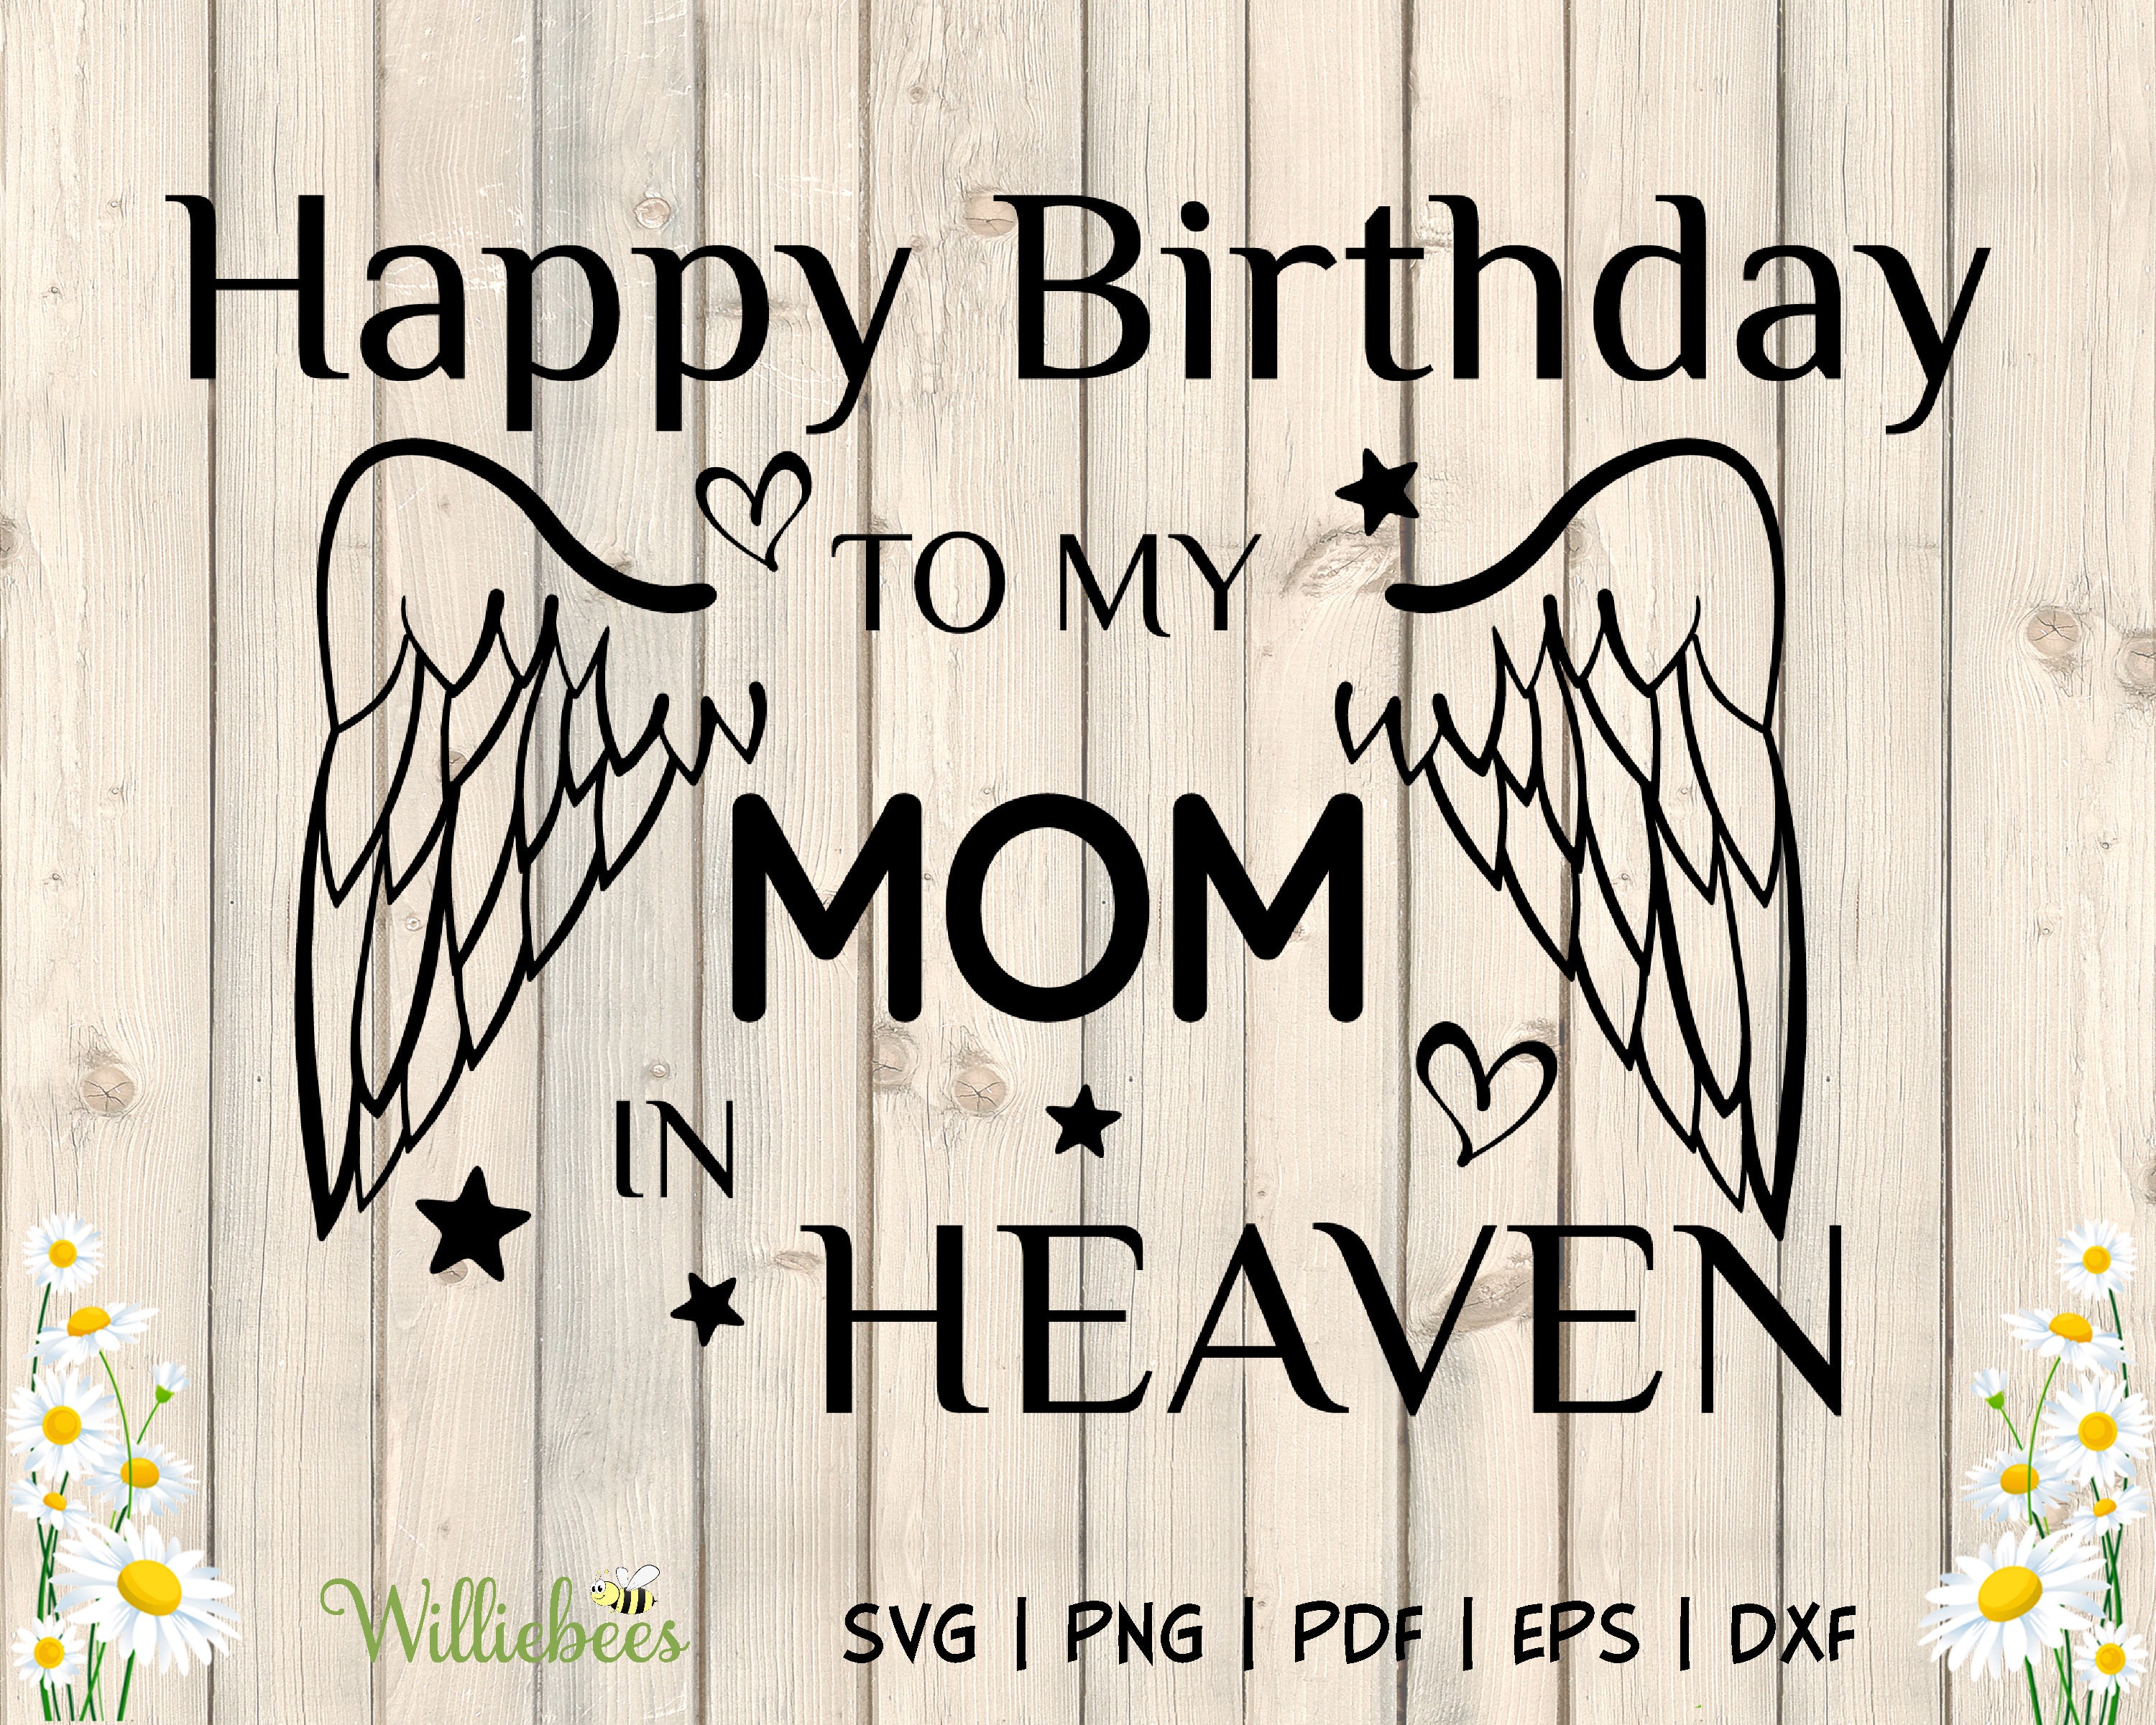 happy birthday in heaven mom poem